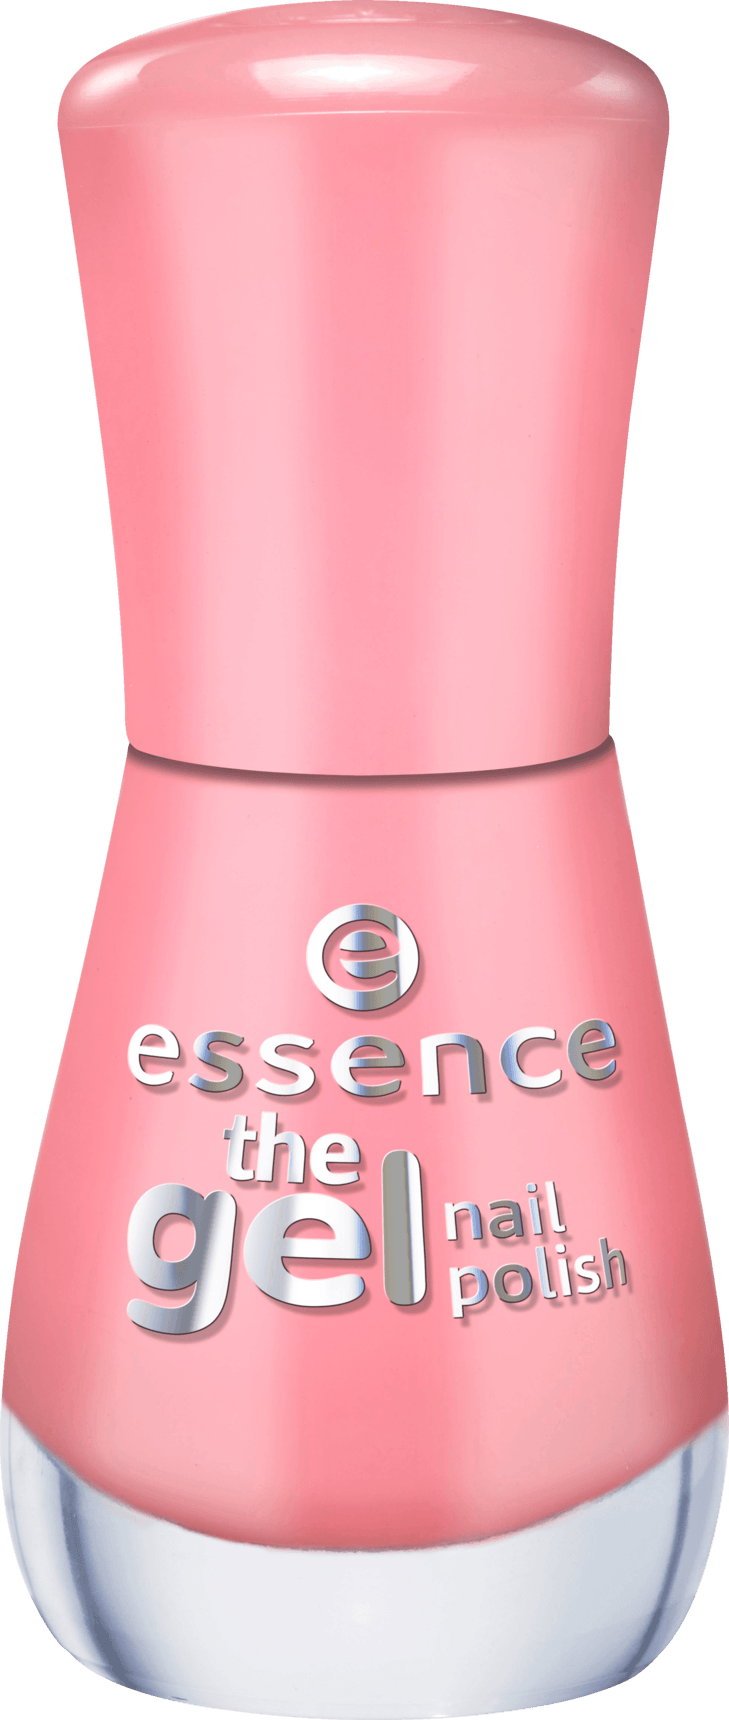 Essence гель. Лак Essence the Gel Nail Polish, 8 мл. Essence / лак для ногтей clean & strong. ЛАКESSENCE, 8ml, #18. Лаки для ногтей Essence цвета.